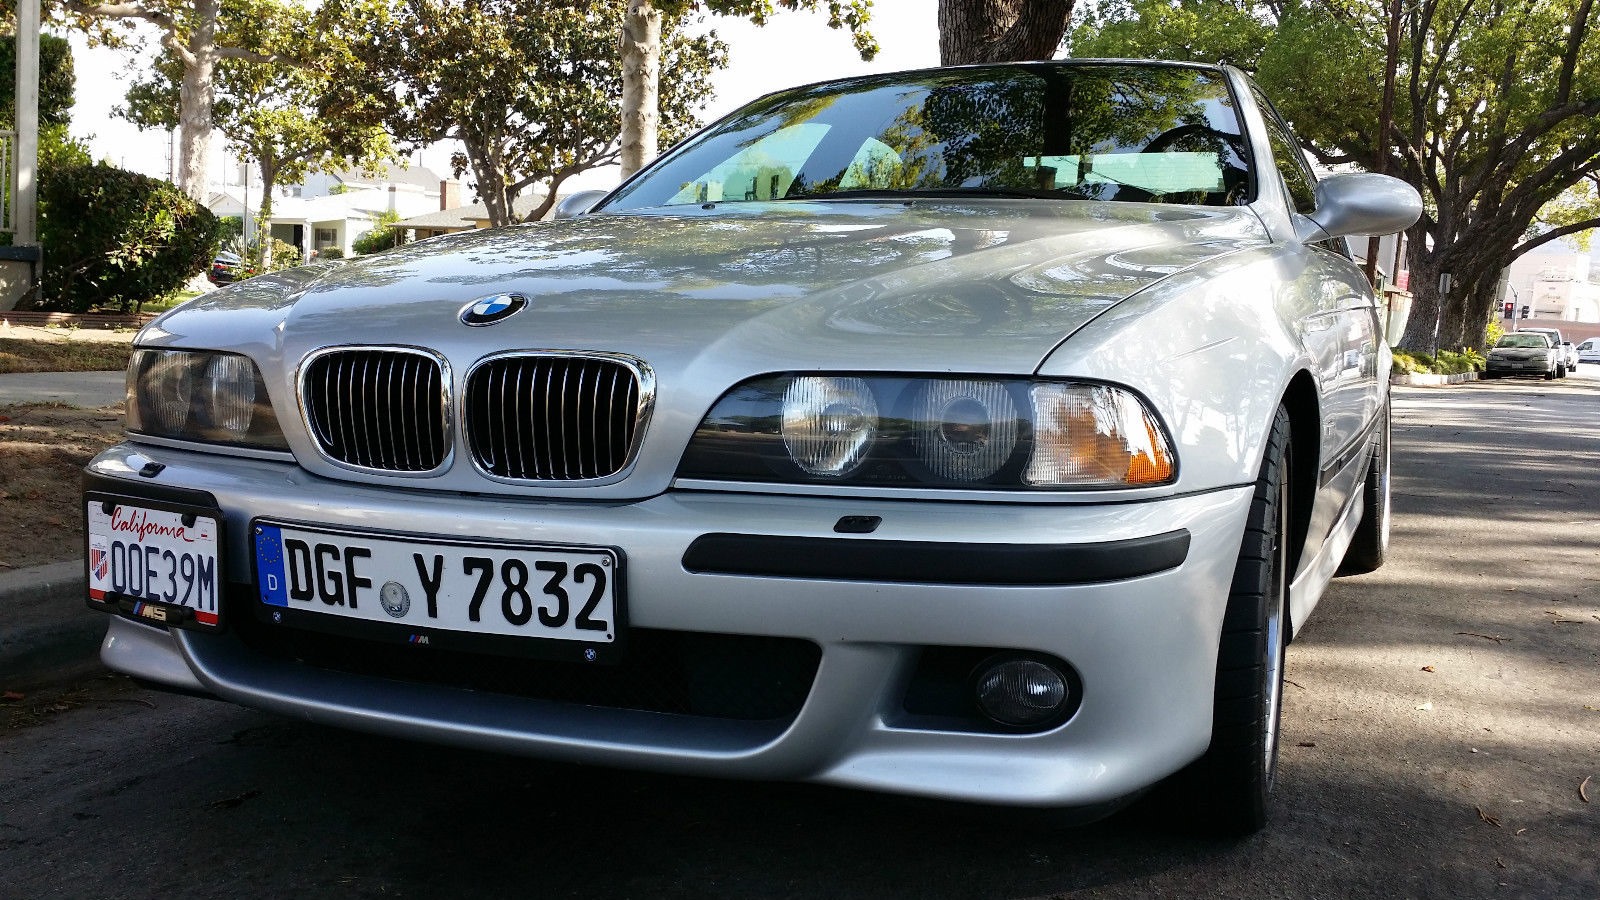 Prodan BMW M5 iz zbirke Paula Walkerja & Rogera Rodasa